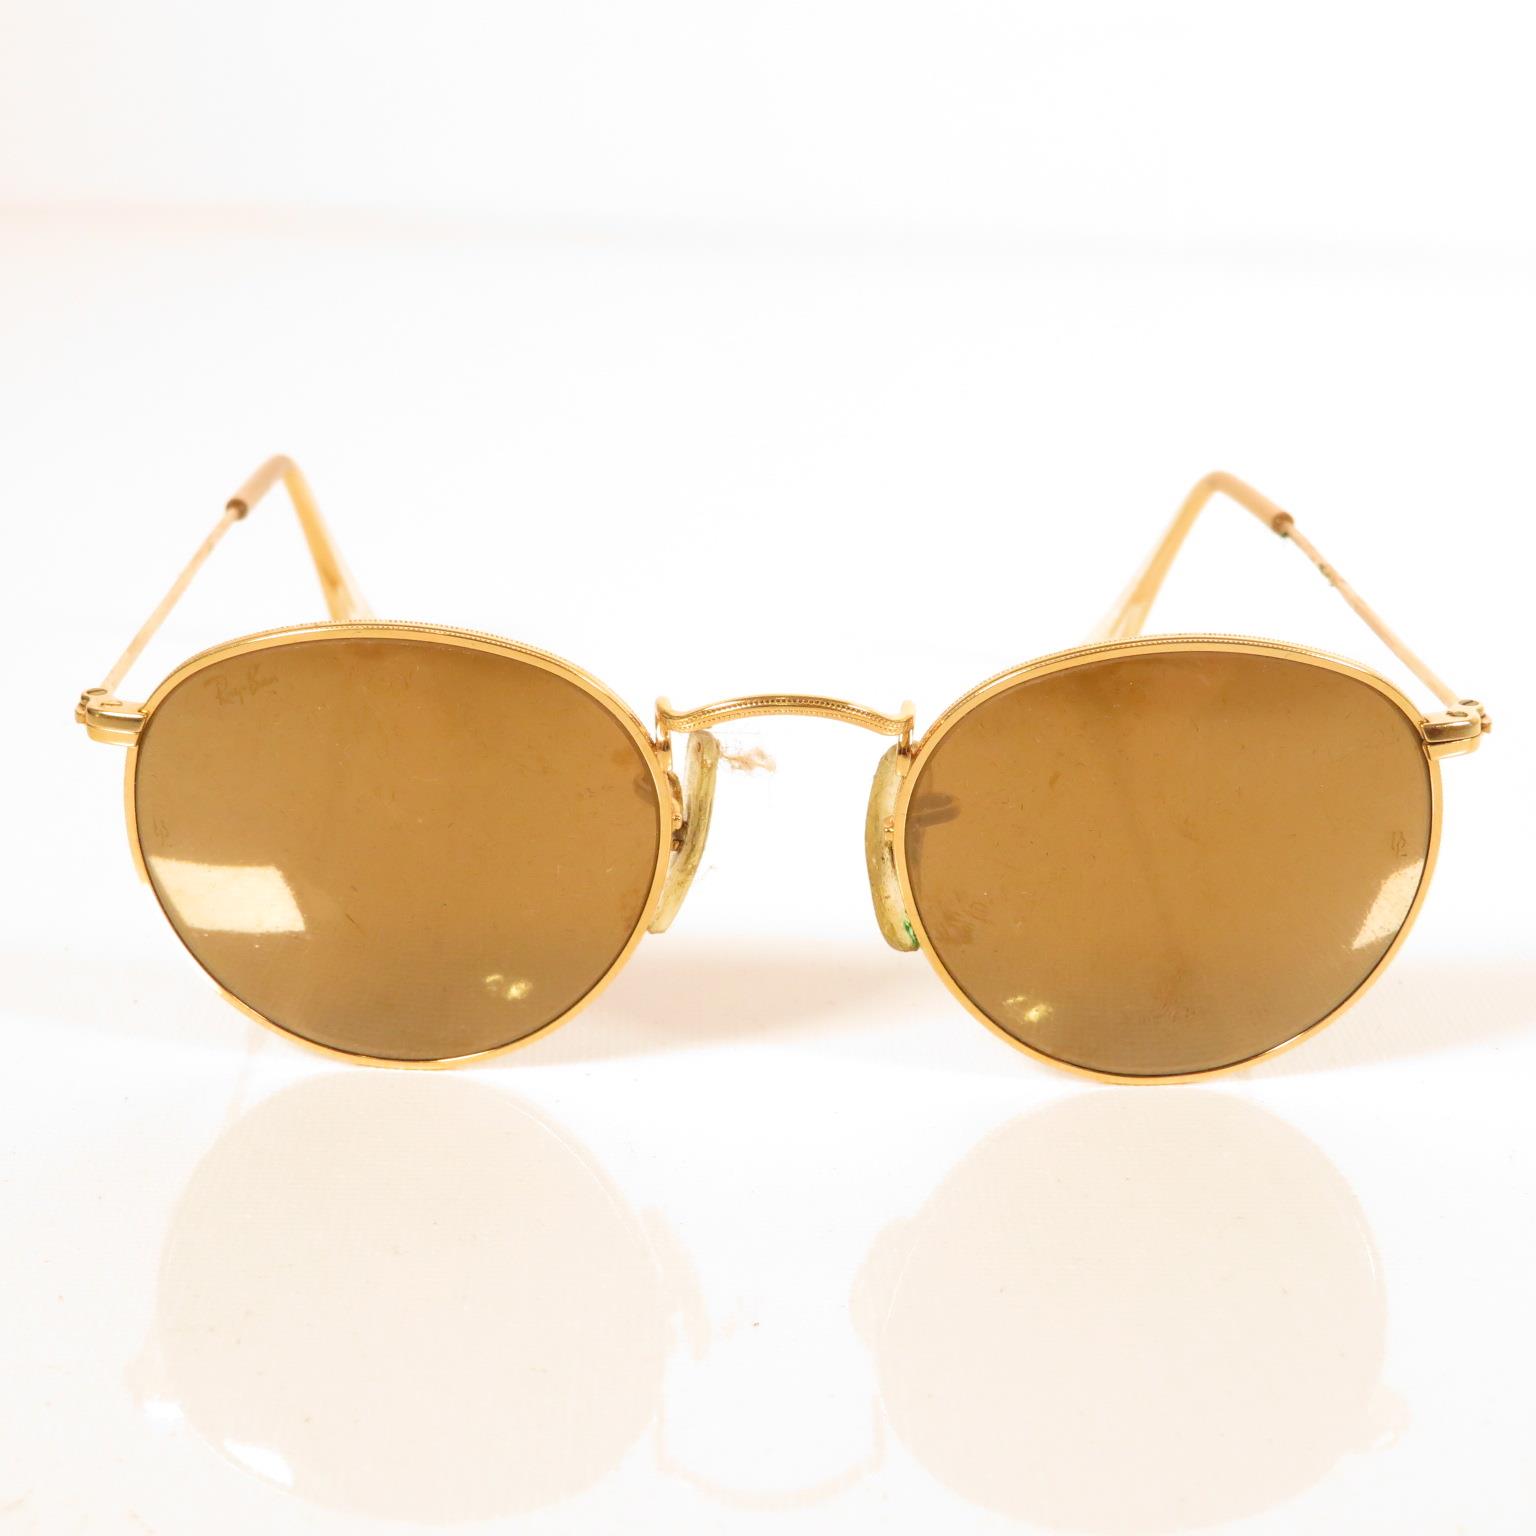 4x pairs Ray Ban sunglasses - - Image 20 of 22